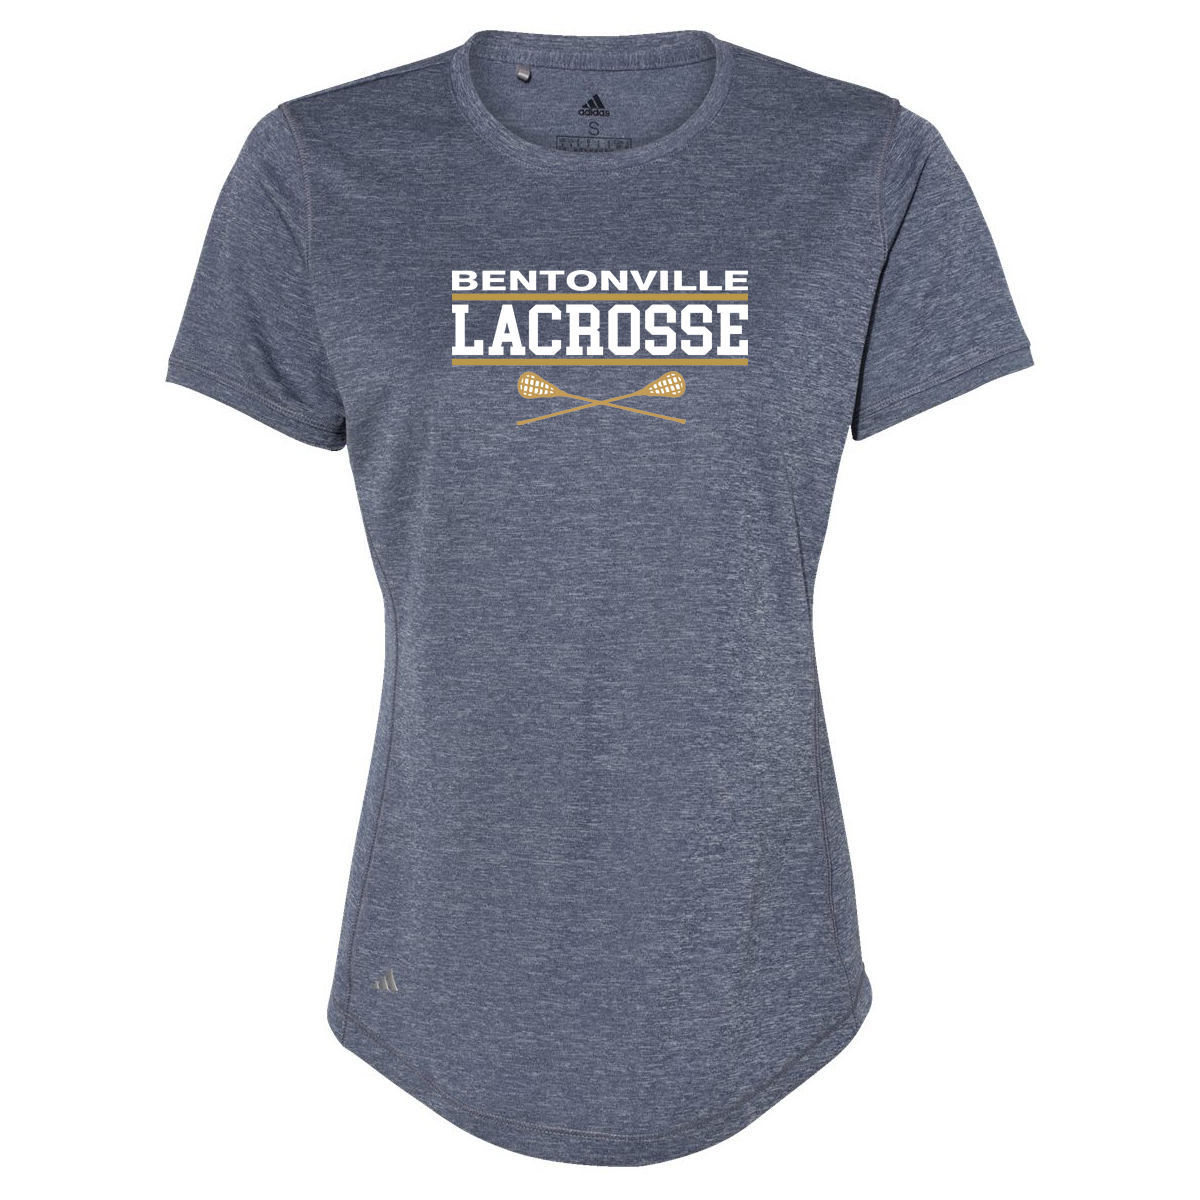 Bentonville Lacrosse Women's Adidas Sport T-Shirt